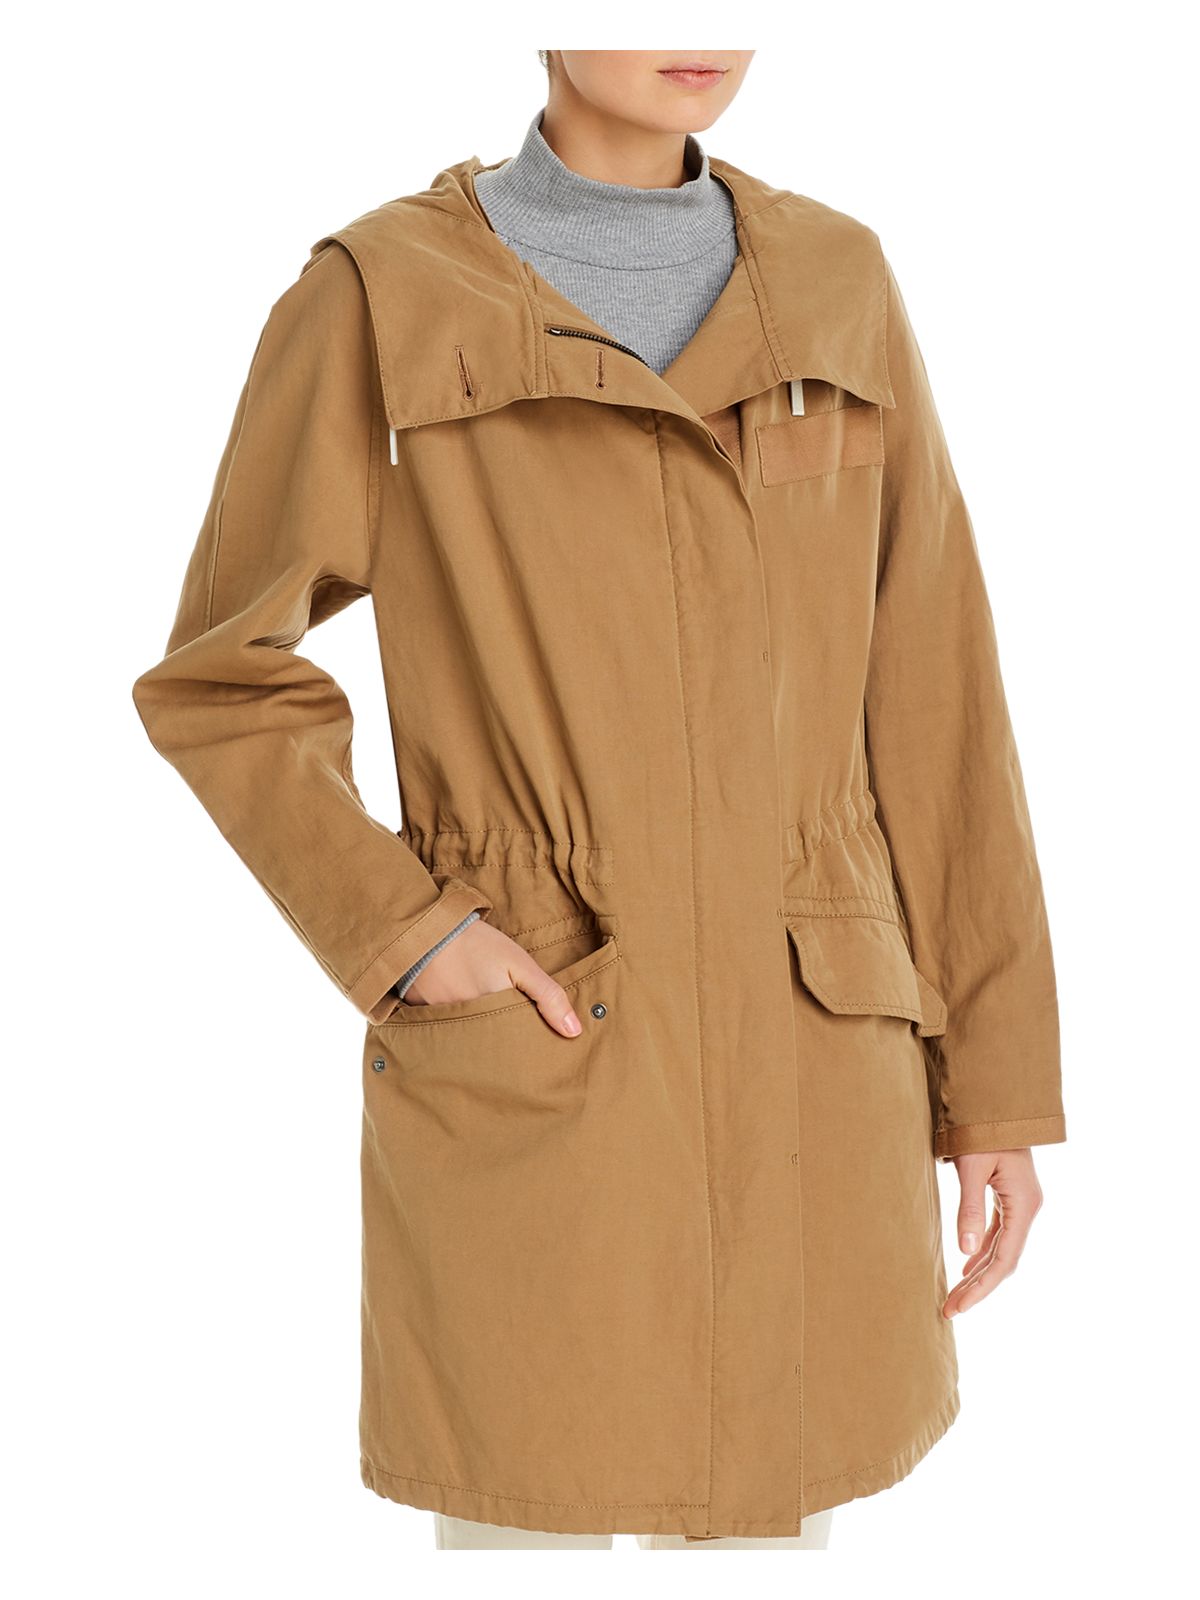 YS ARMY Womens Beige Zip Up Winter Jacket Coat 36